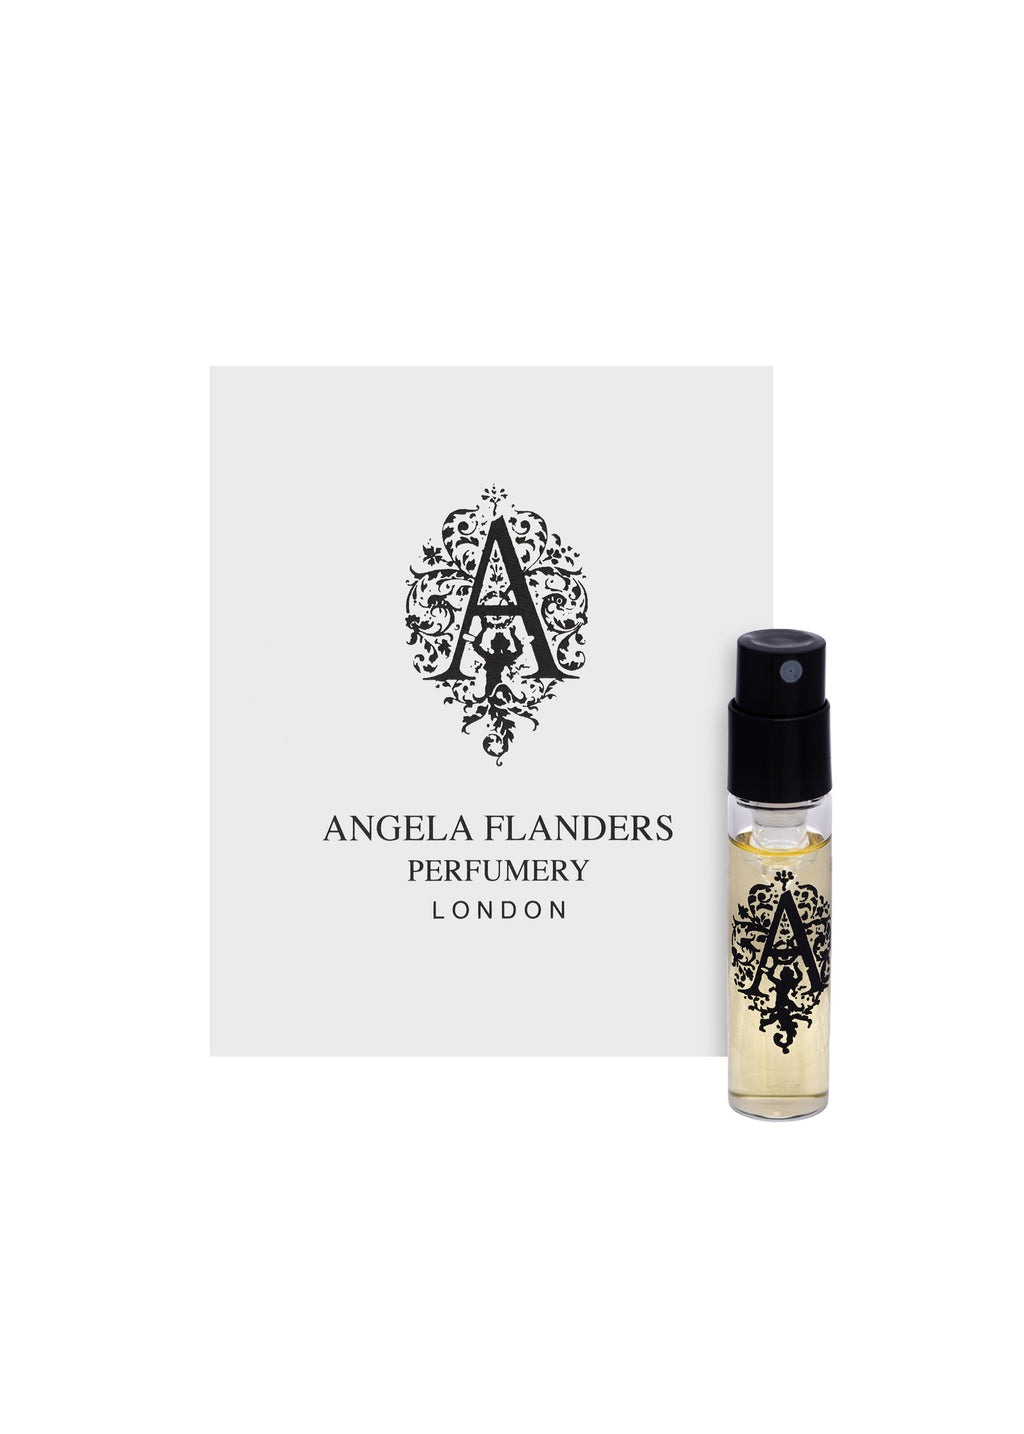 Angela Flanders Moroccan Rose eau de Parfum Sample